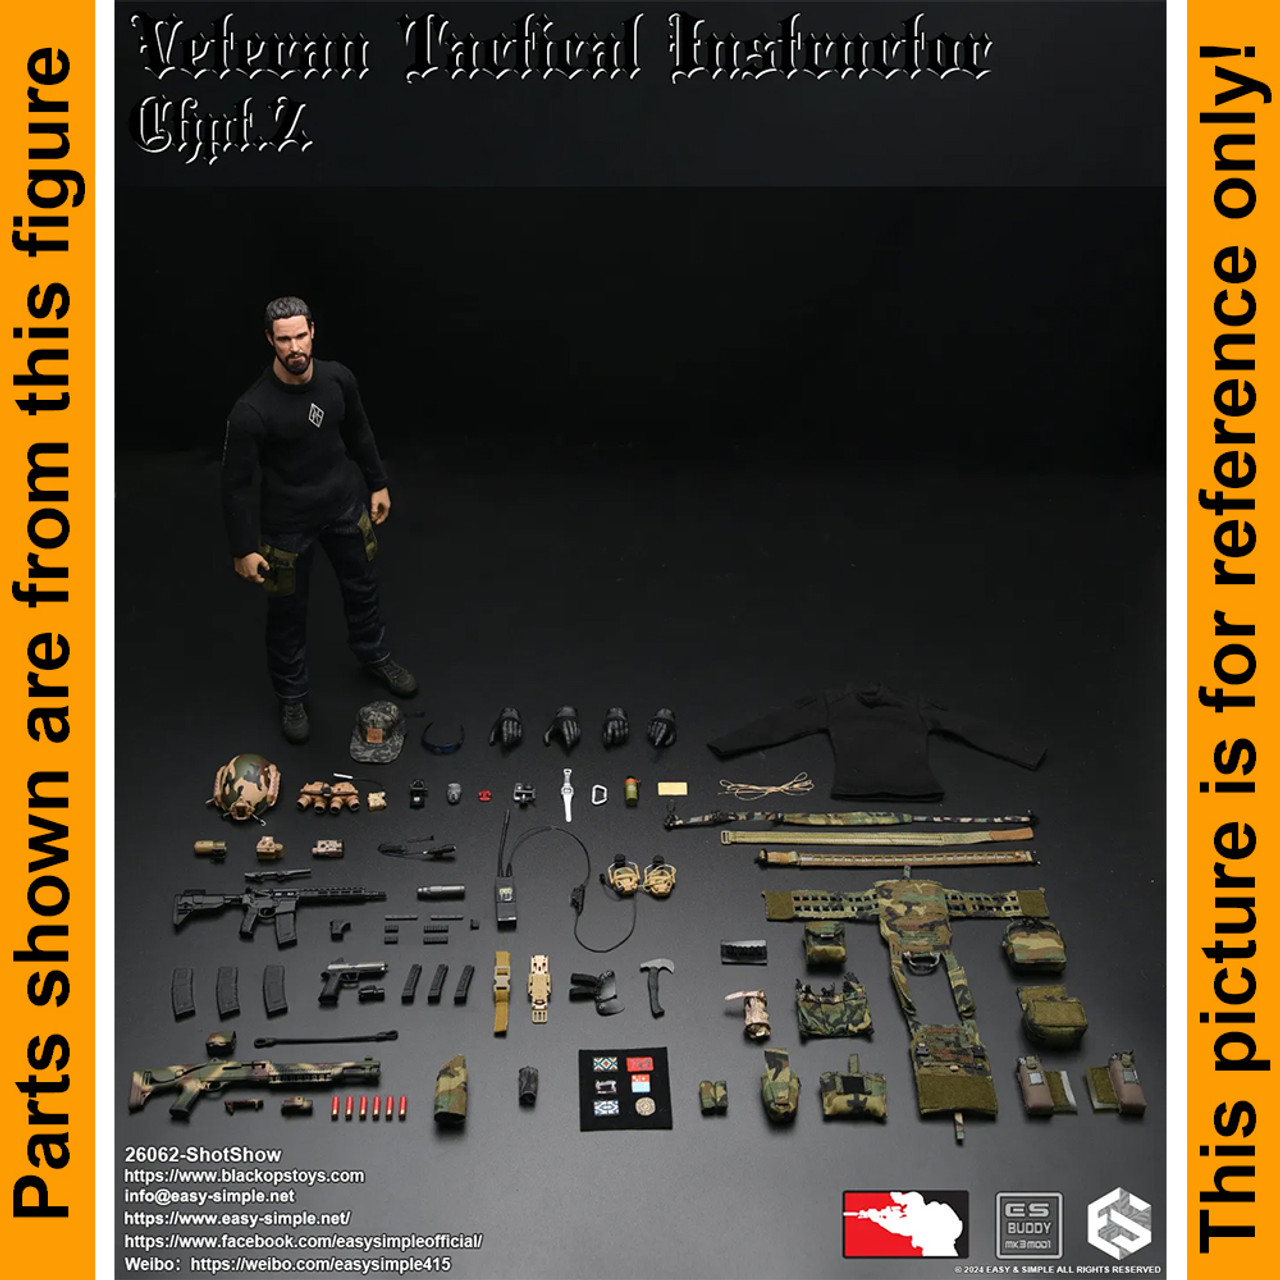 Shotshow Tactical Instructor - Tactical Radio Set - 1/6 Scale -